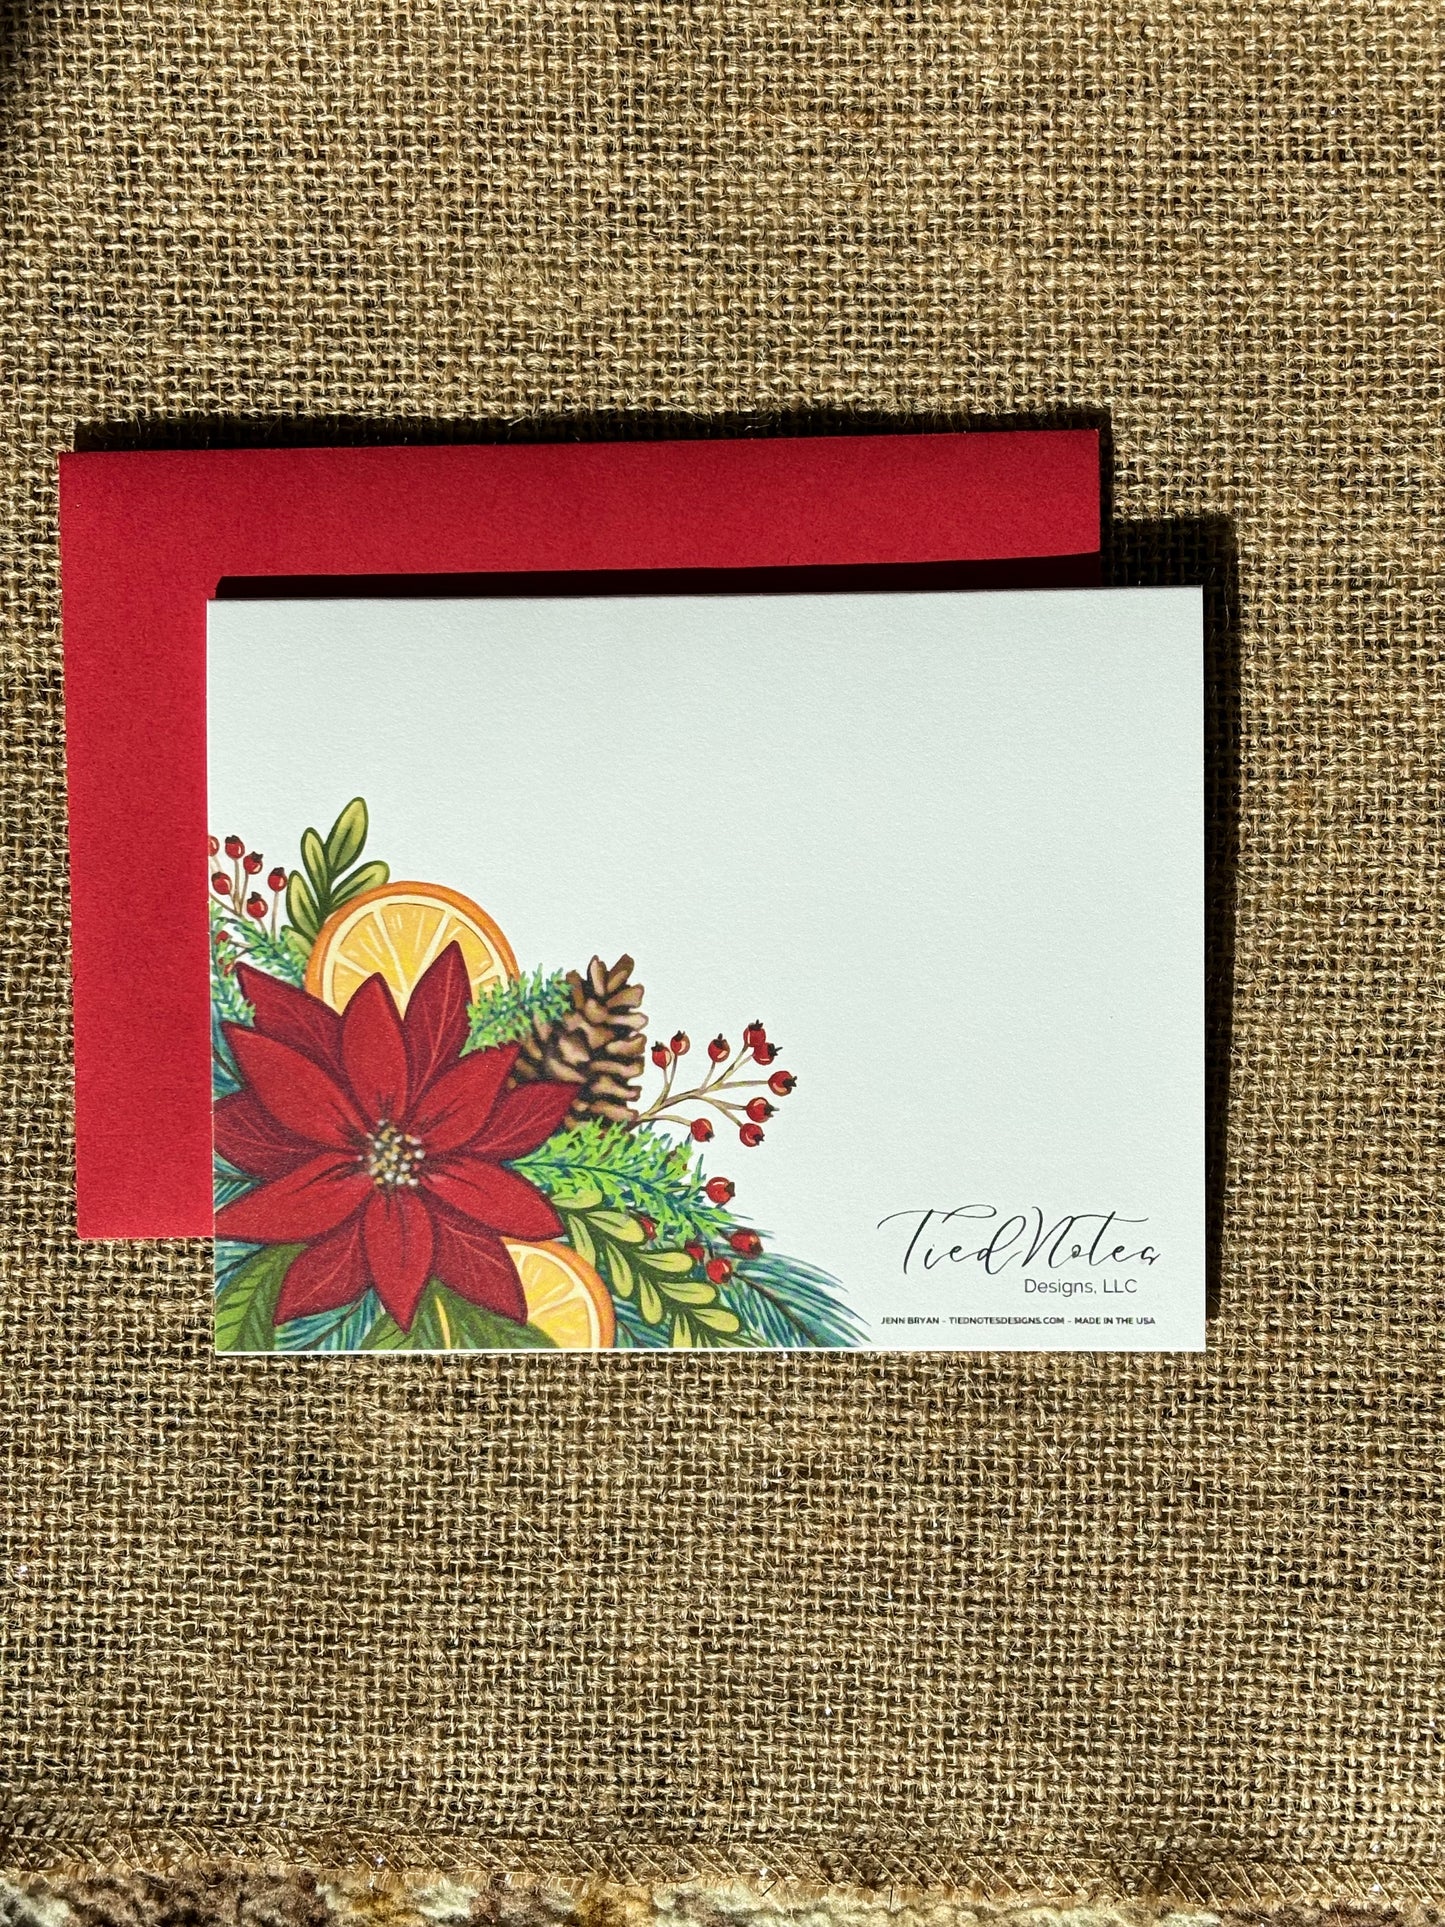 Christmas Poinsettia Greeting Card